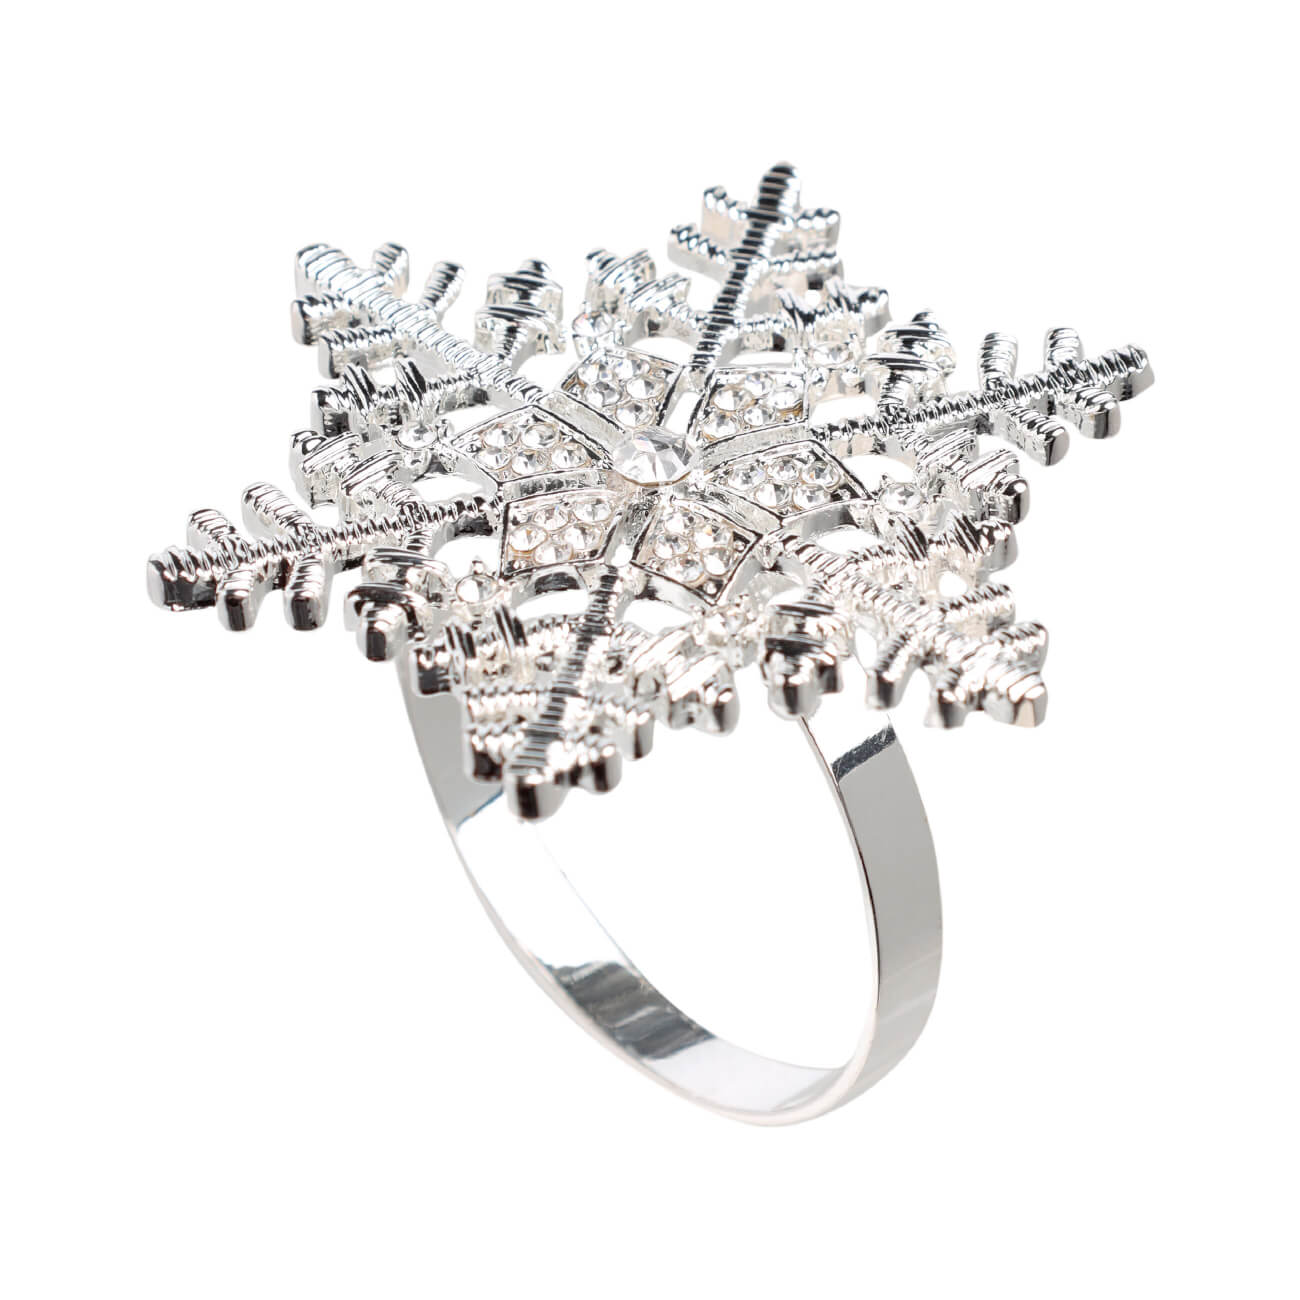 kuchenland кольцо для салфеток 5 см 2 шт металл серебристое кольцо fantastic r Кольцо для салфеток, 5 см, металл, серебристое, Снежинка, Snowfall